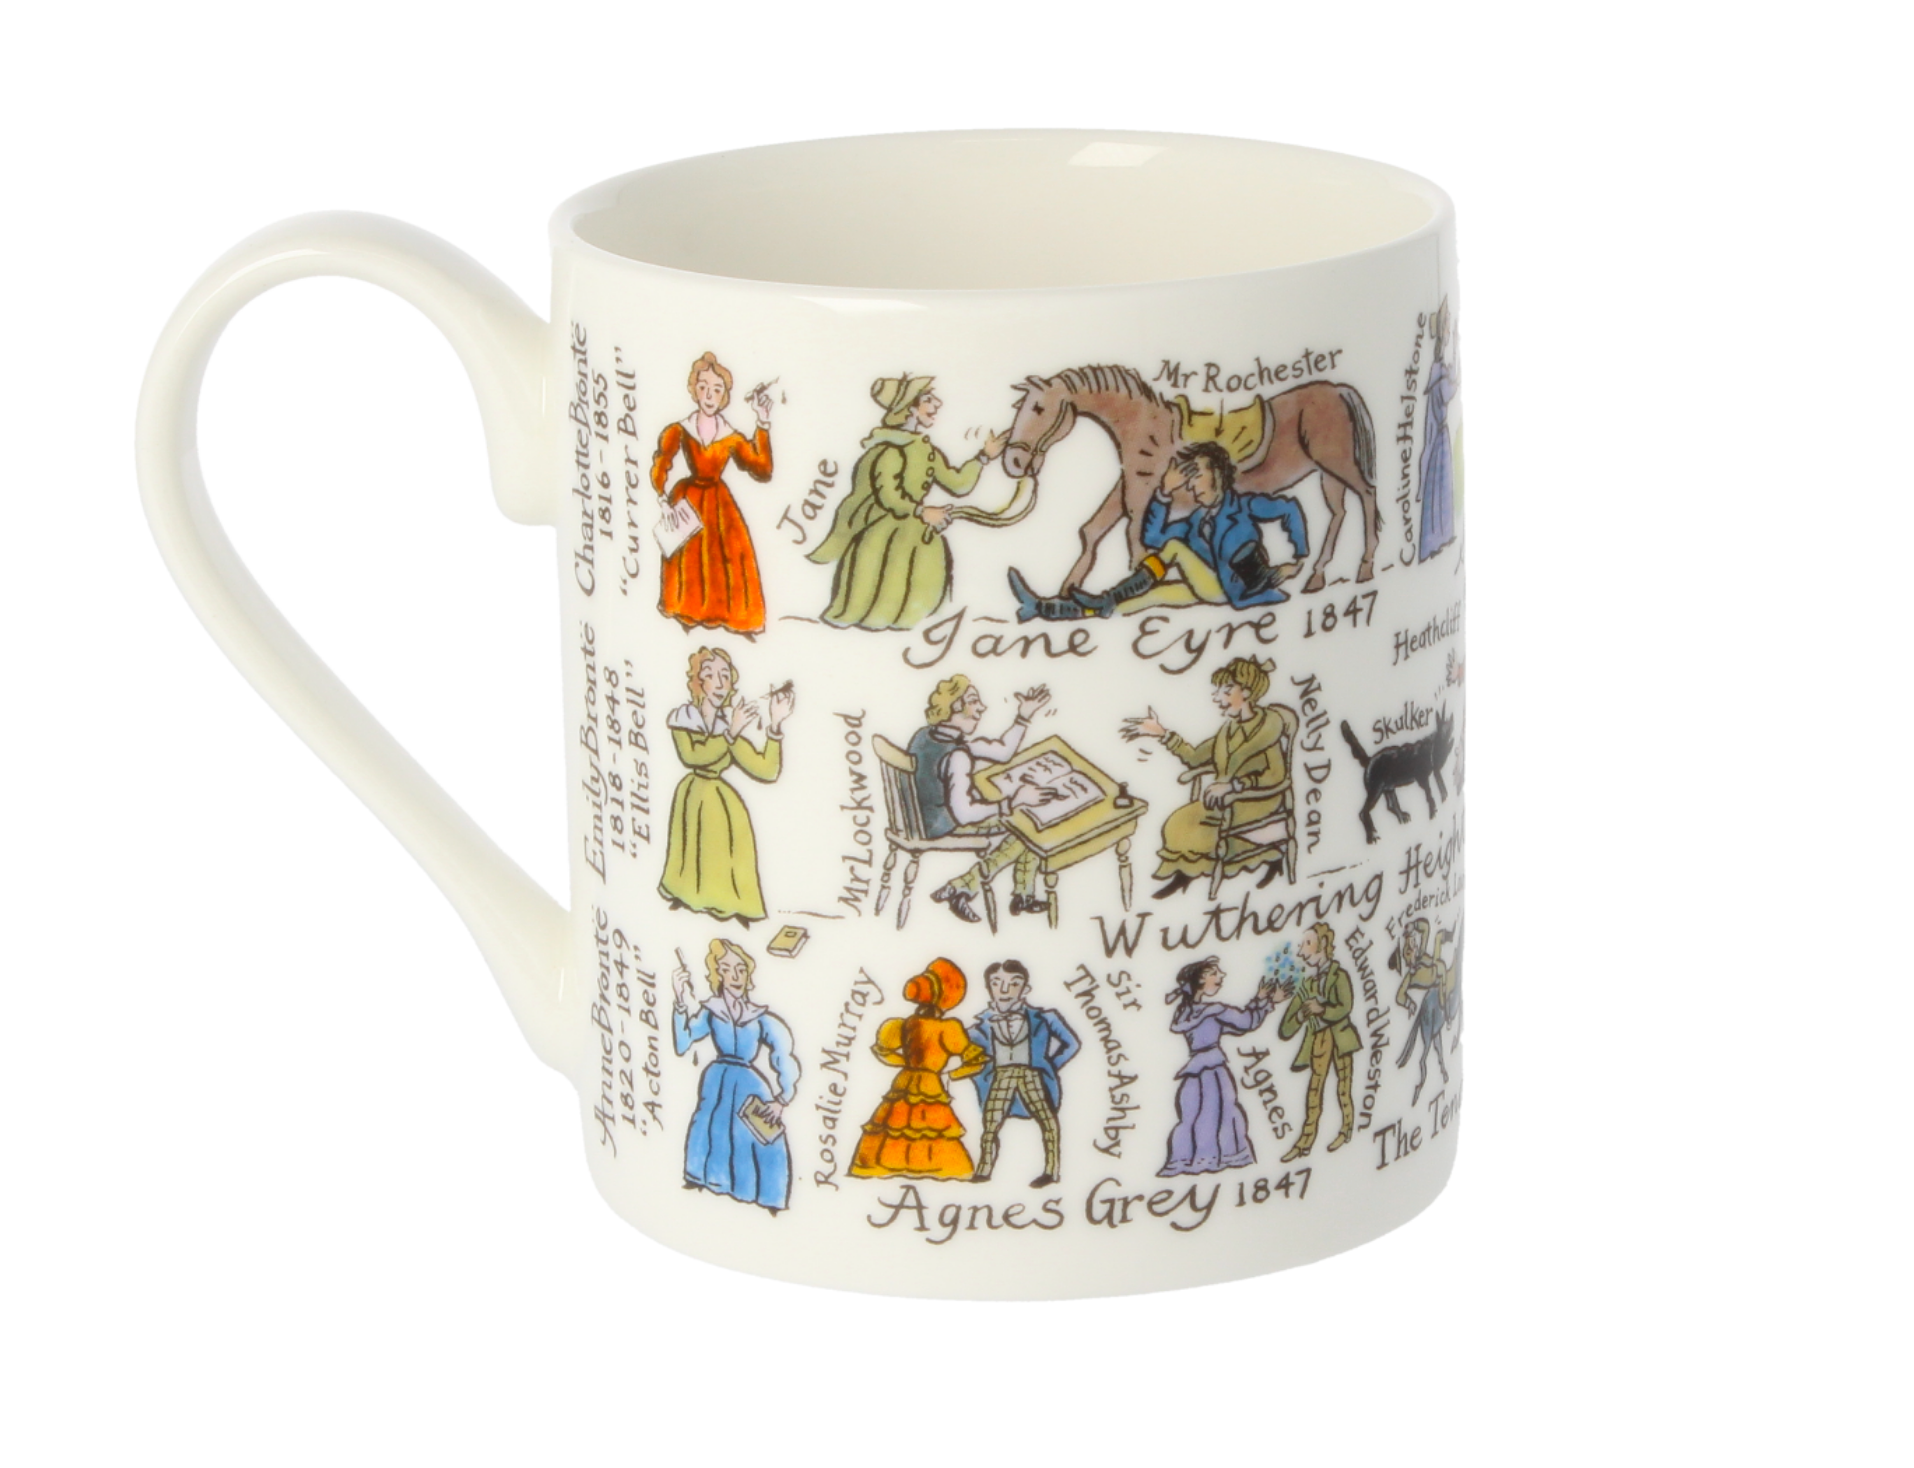 Brontë Characters Mug